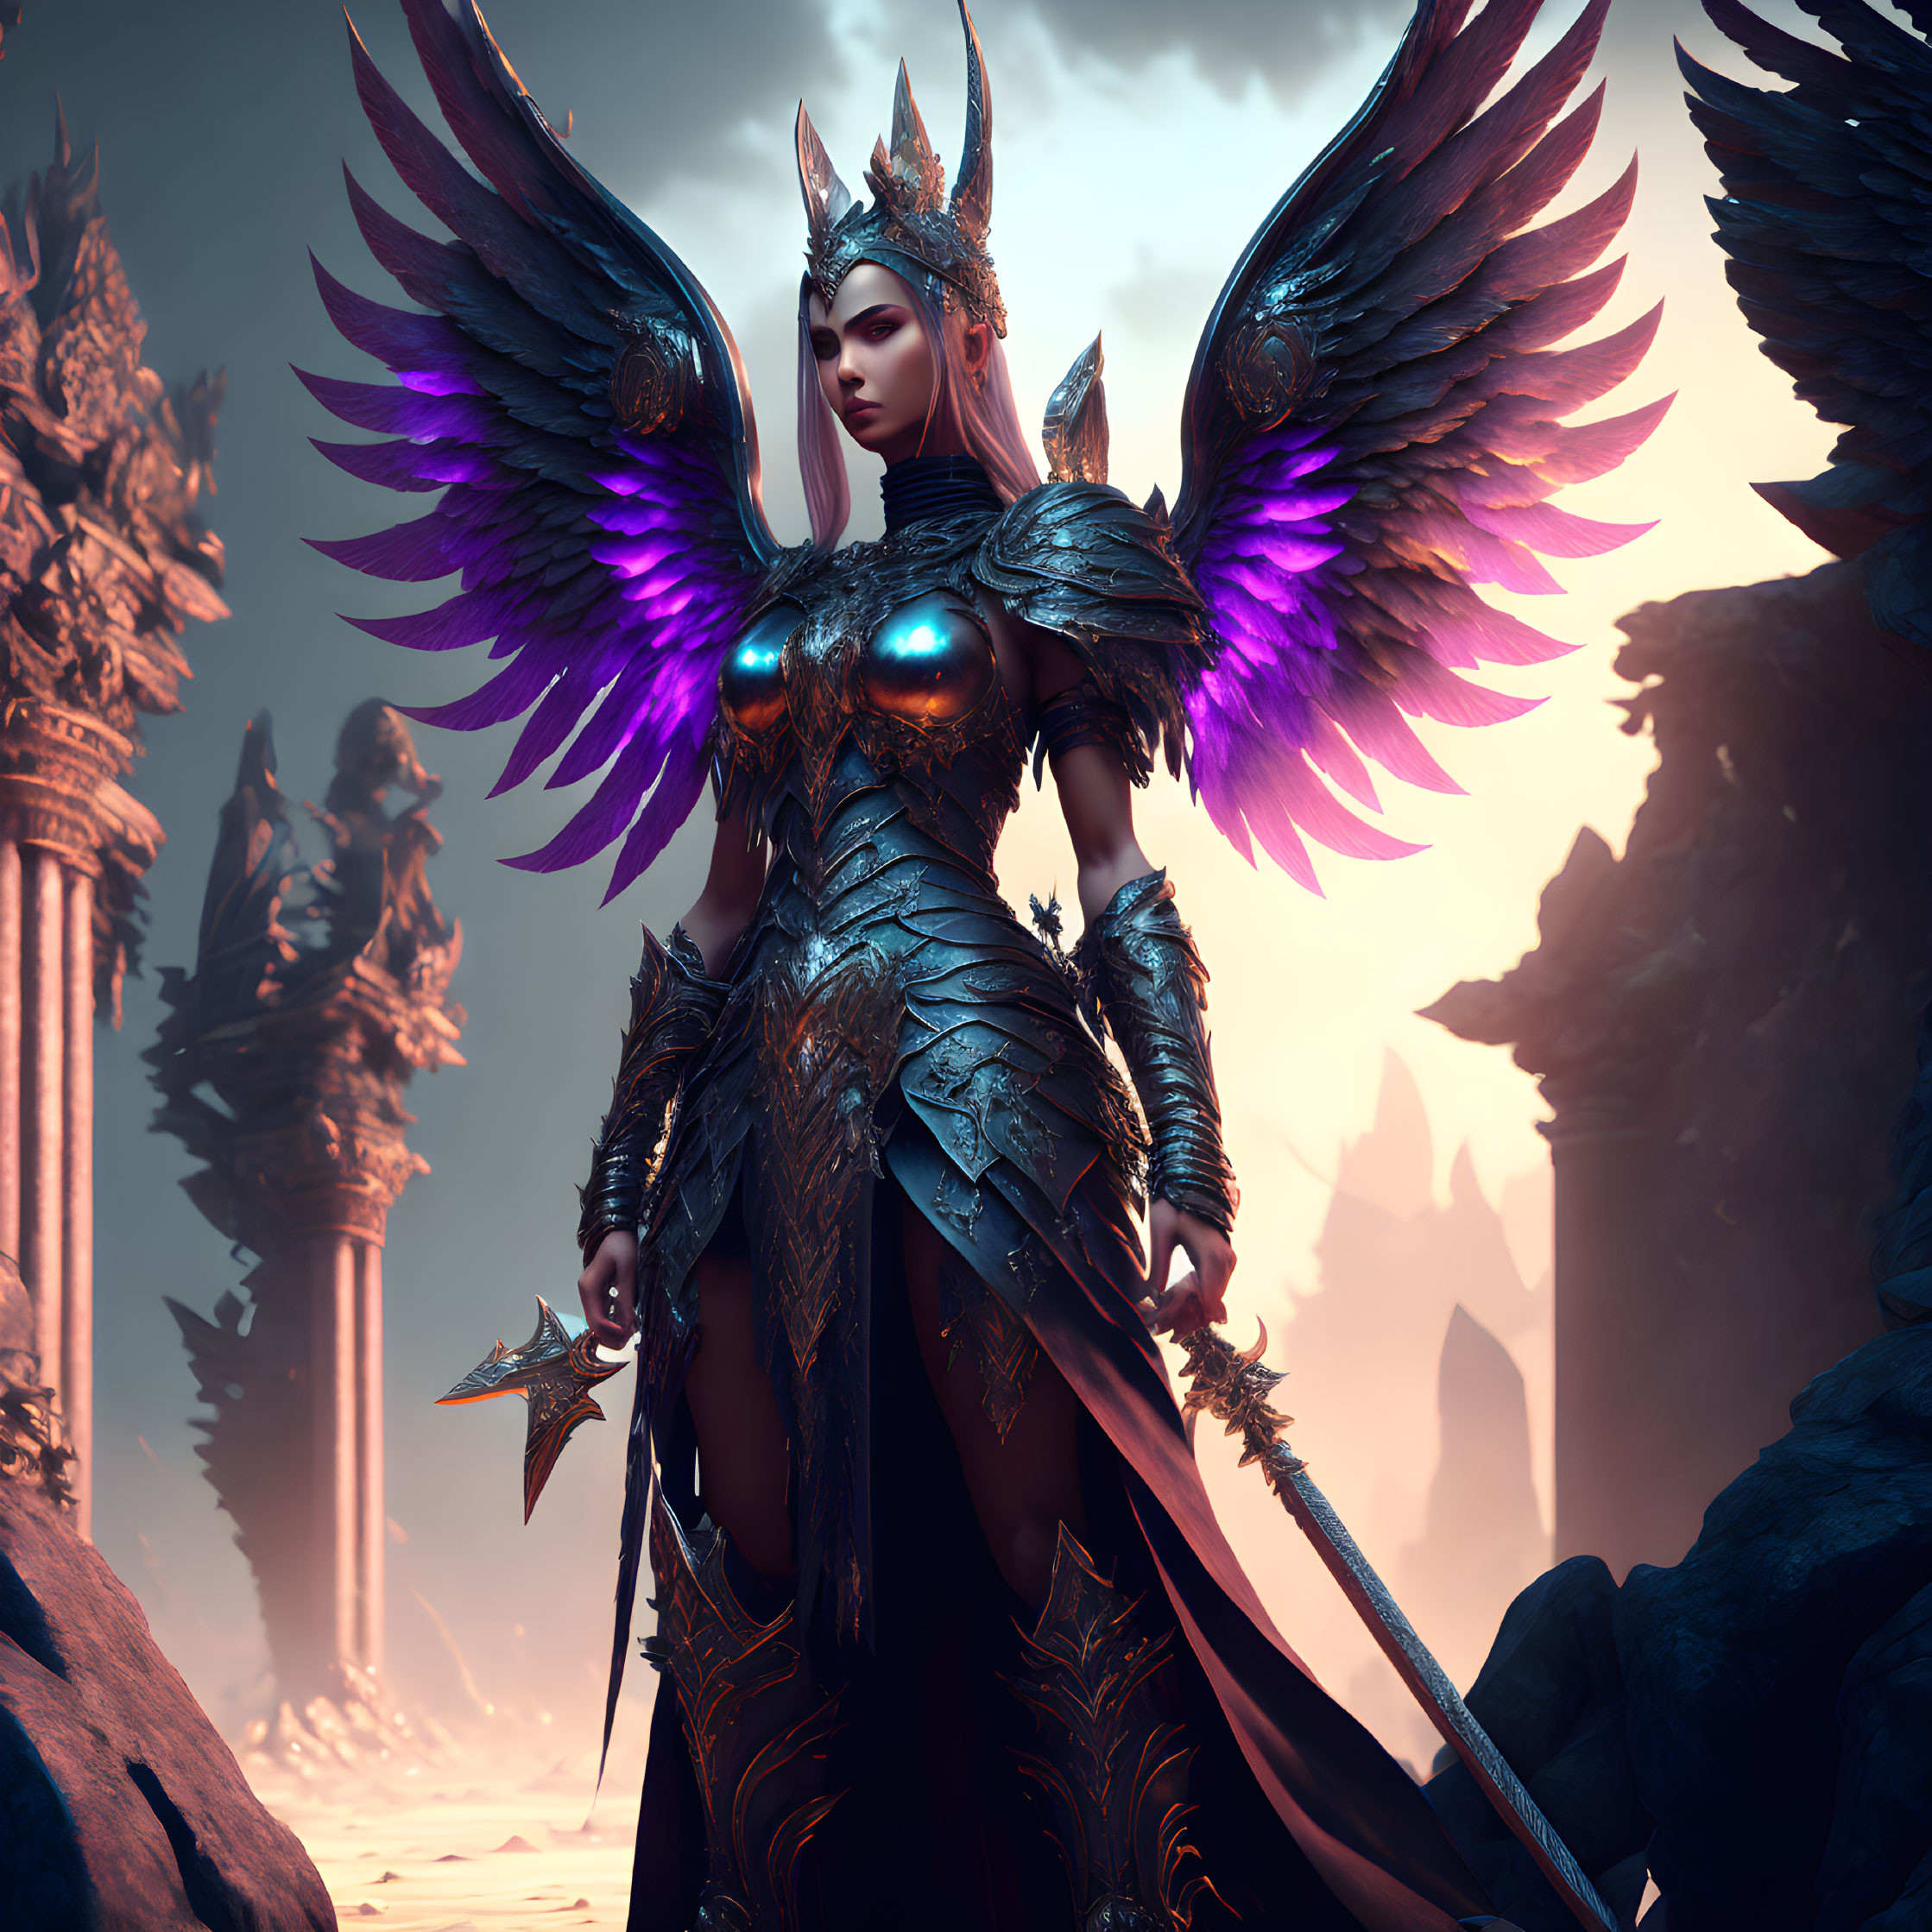 Regal warrior with purple wings in dark armor on mystical landscape